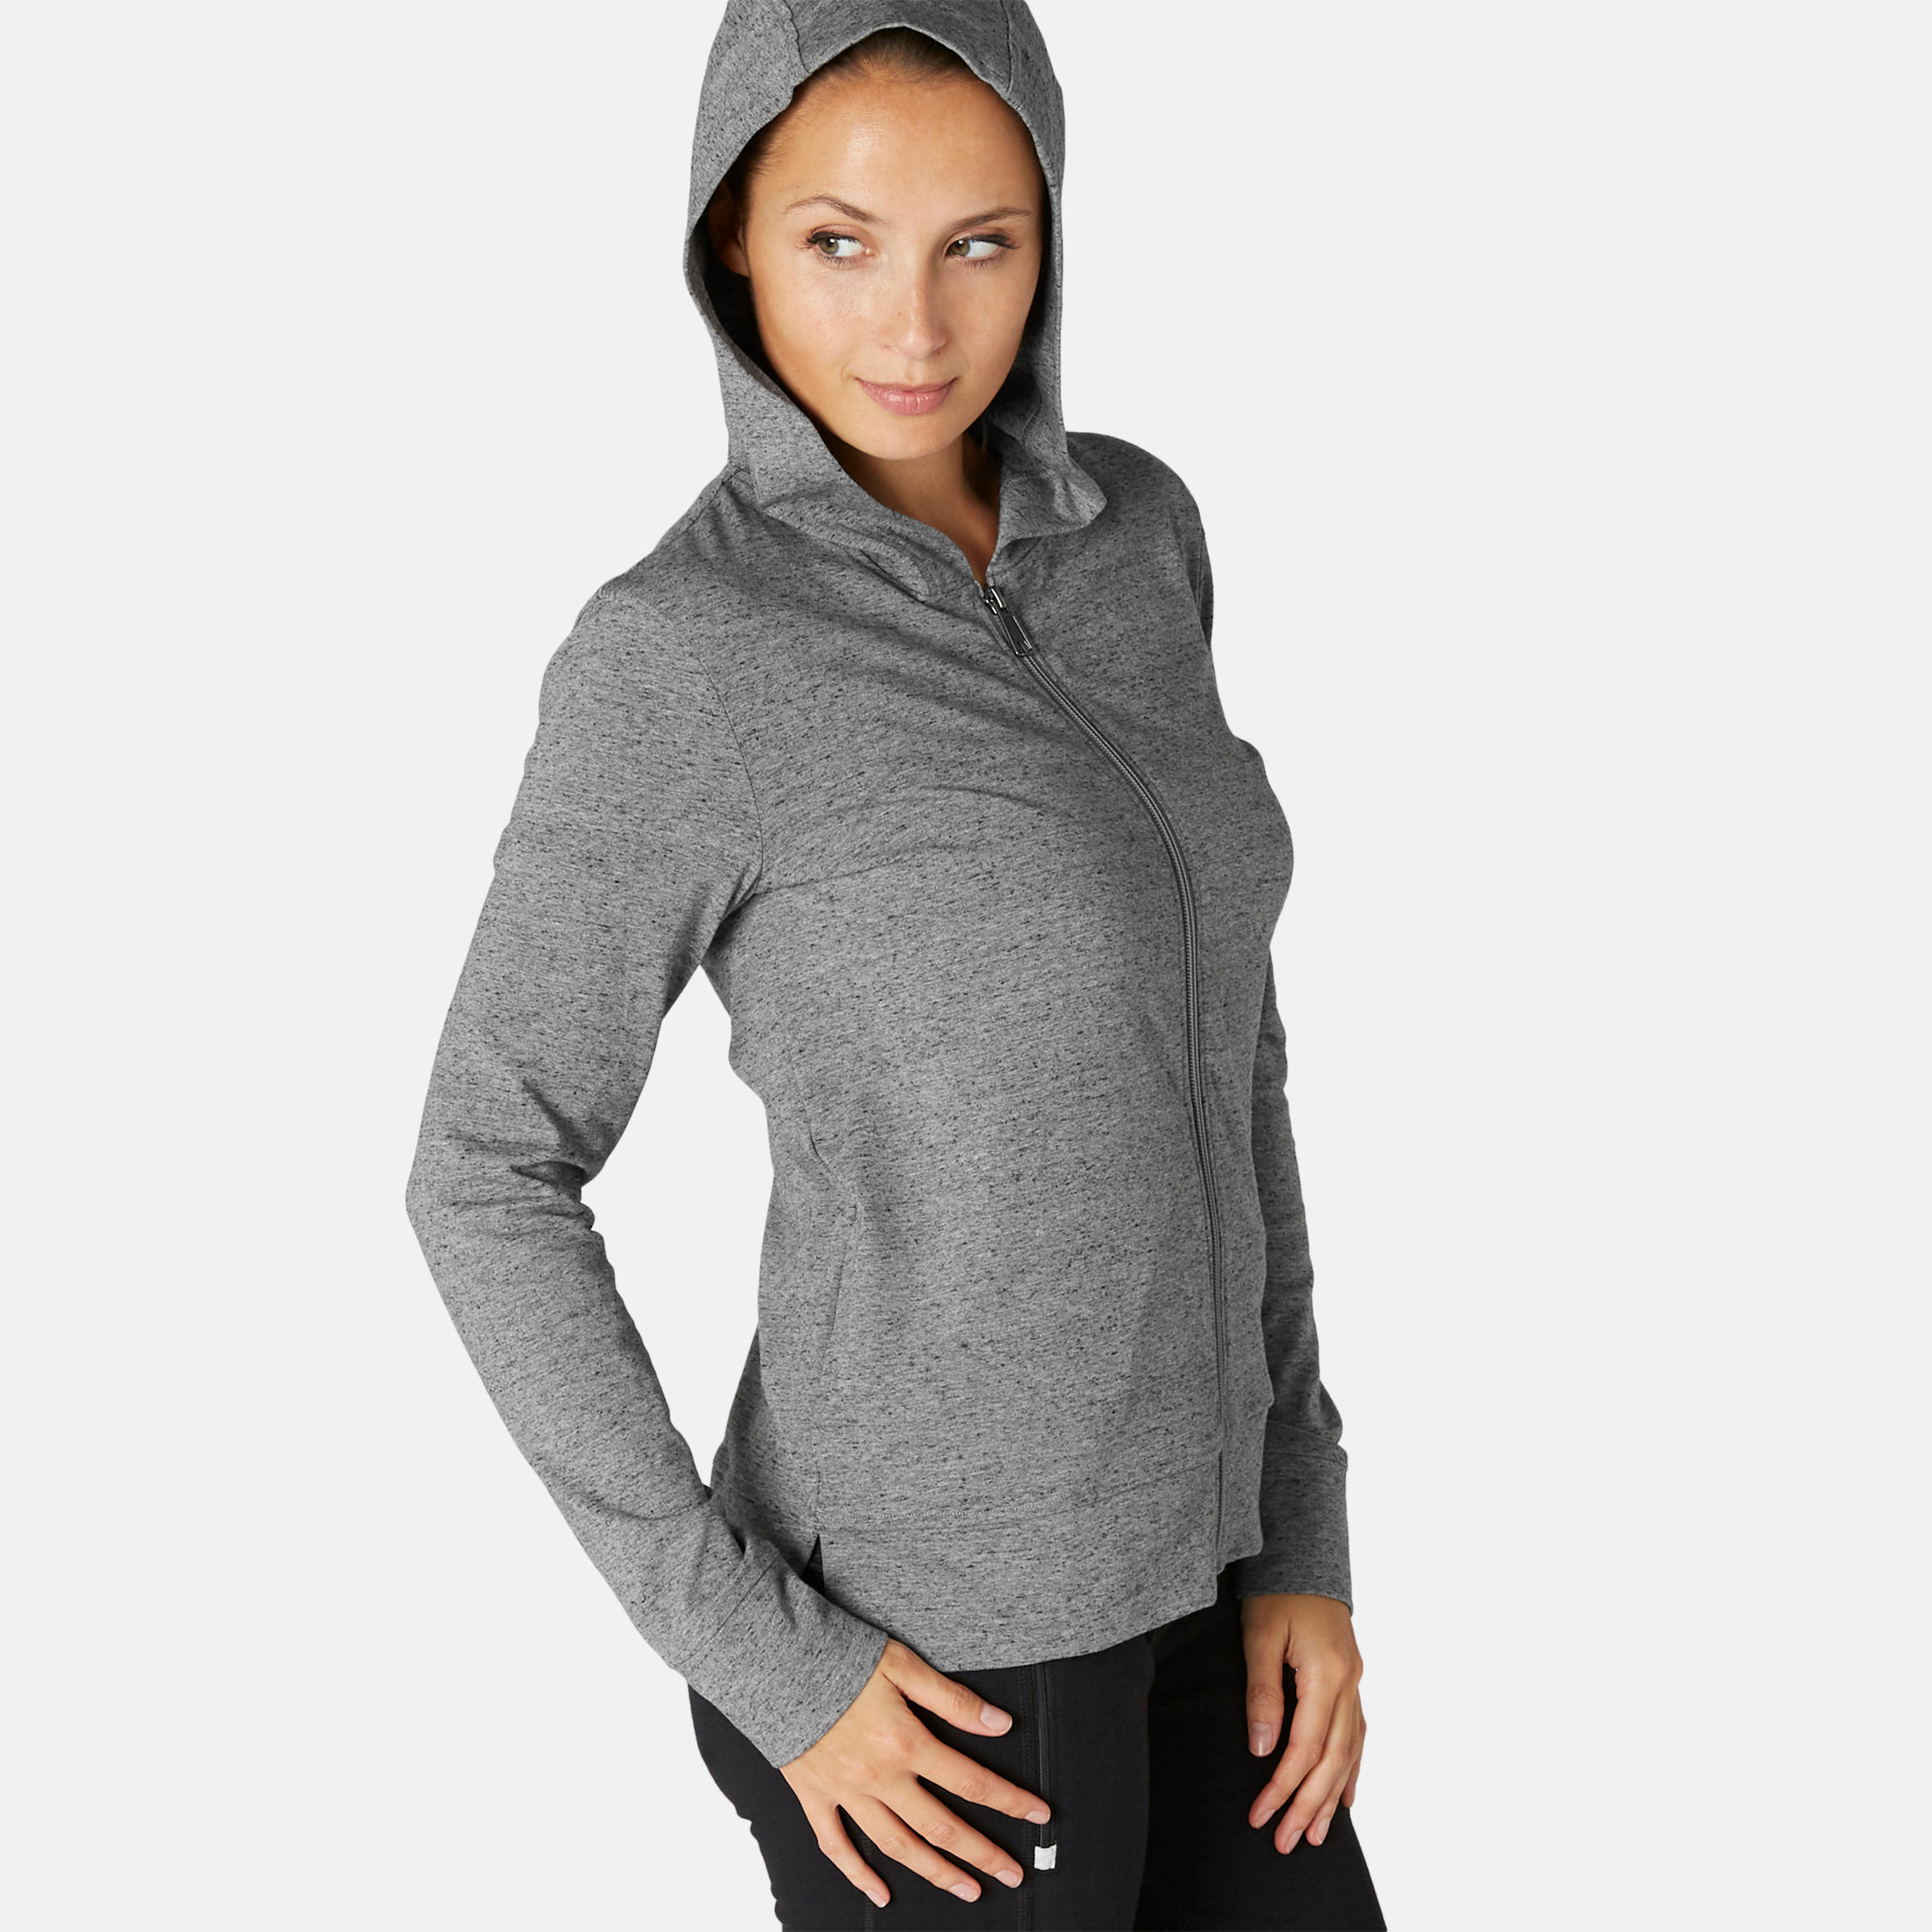 Women Sweatshirt Jacket With Hoodie For Gym 100-Black